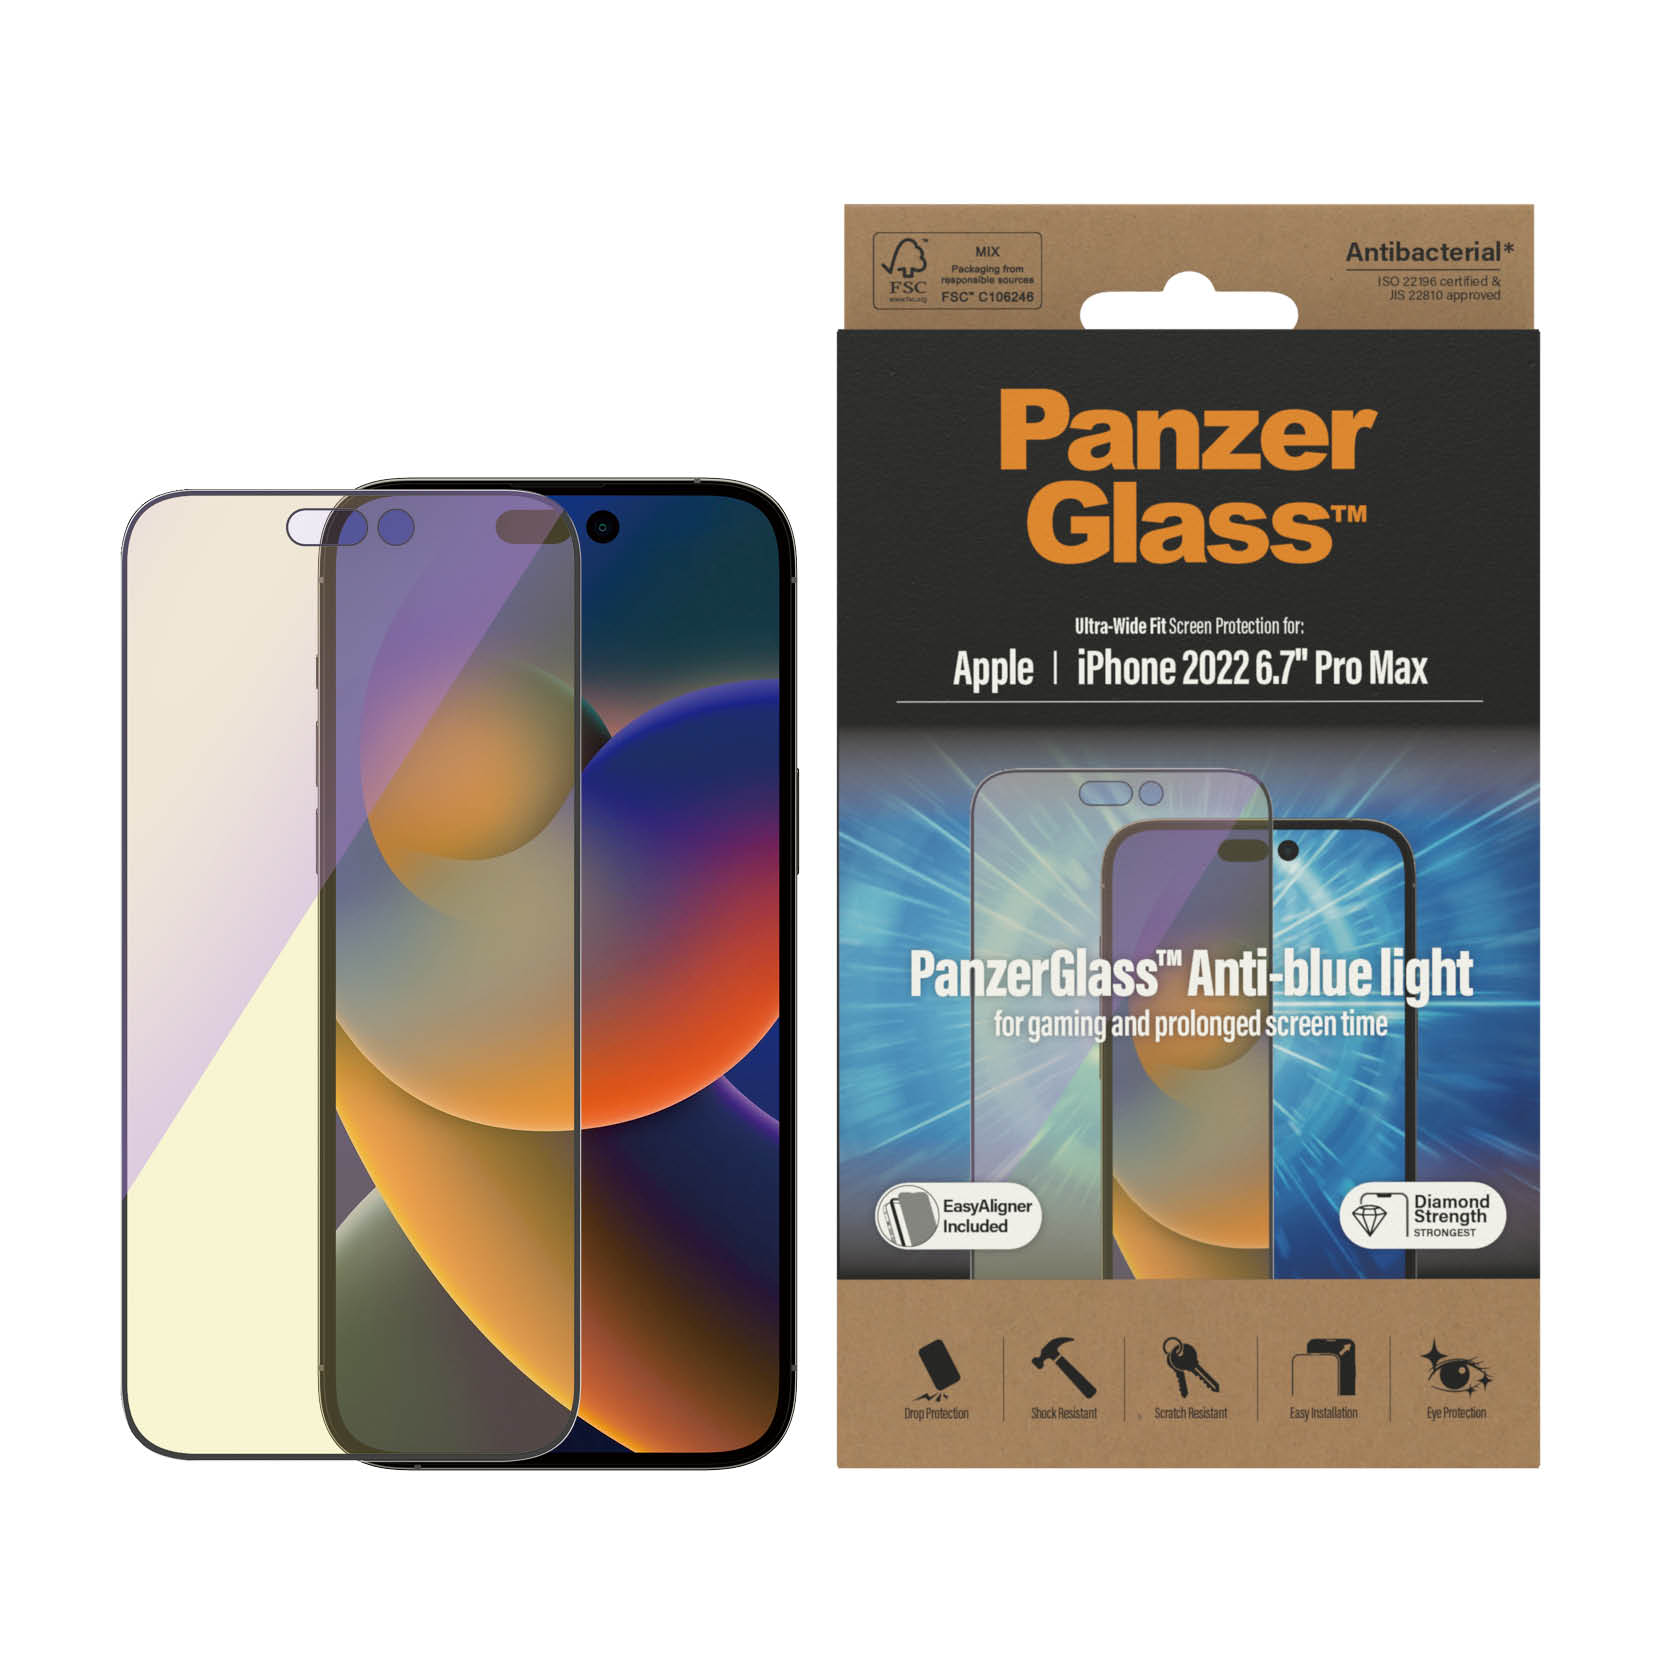 PanzerGlass iPhone 2022 6.7" Pro Max UWF Anti-Bluelight With Applicator